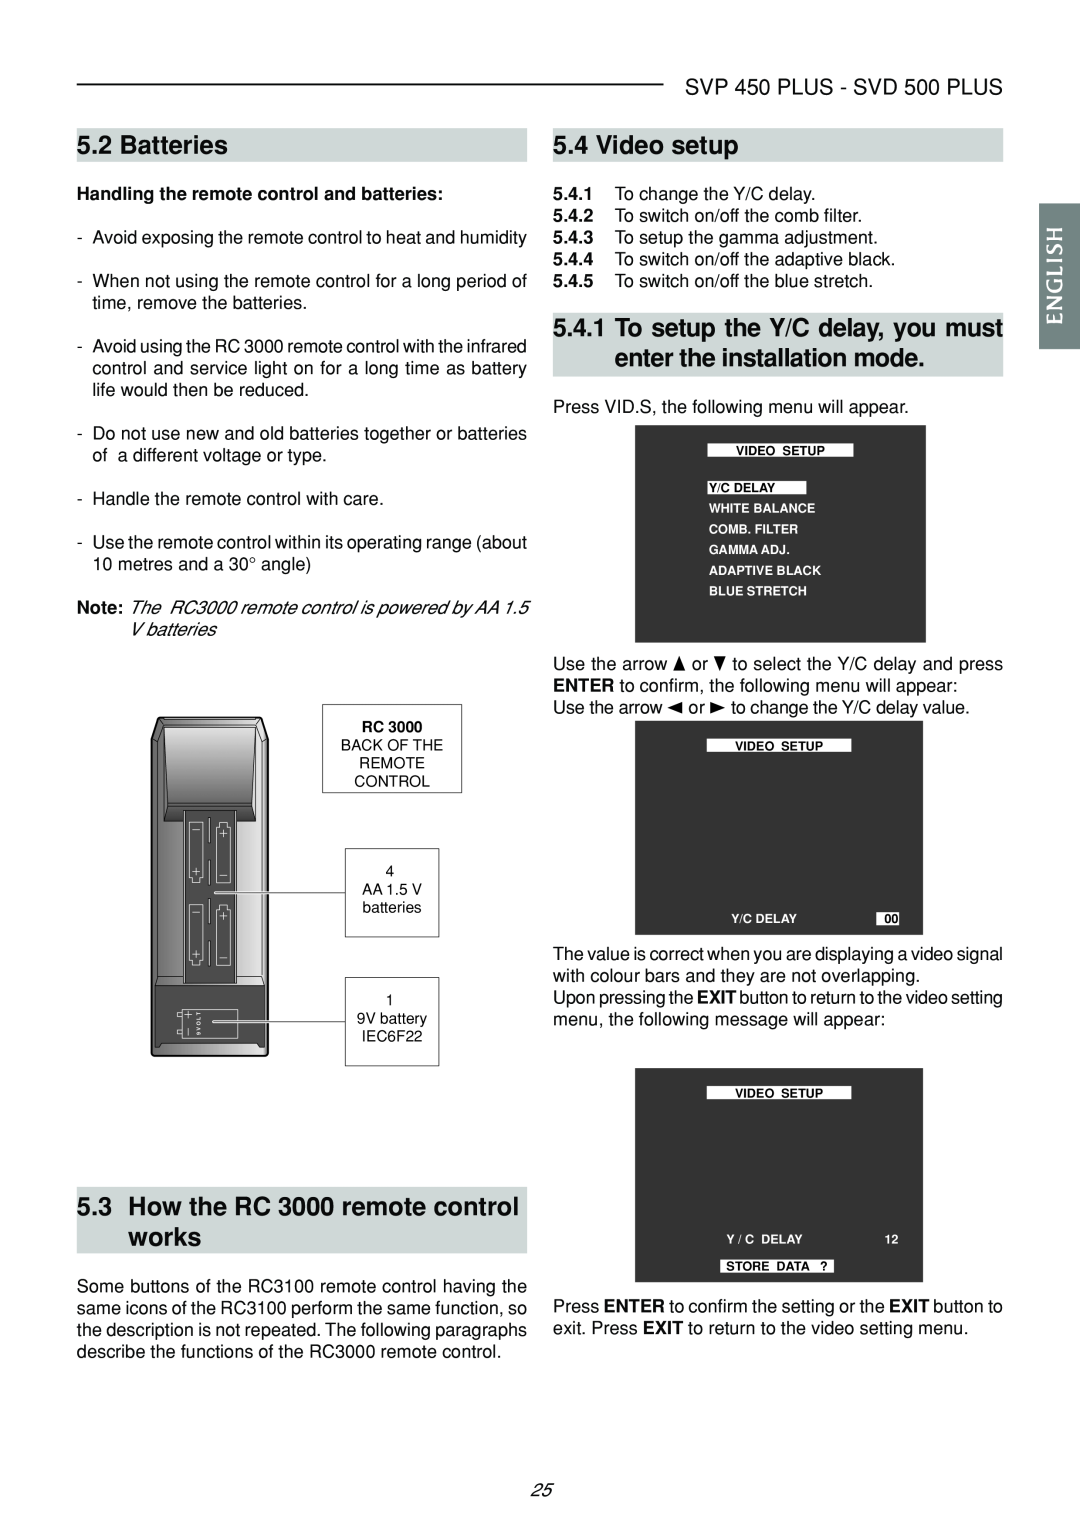 Sim2 Multimedia Batteries, How the RC 3000 remote control works, Video setup, SVP 450 PLUS - SVD 500 PLUS, English 